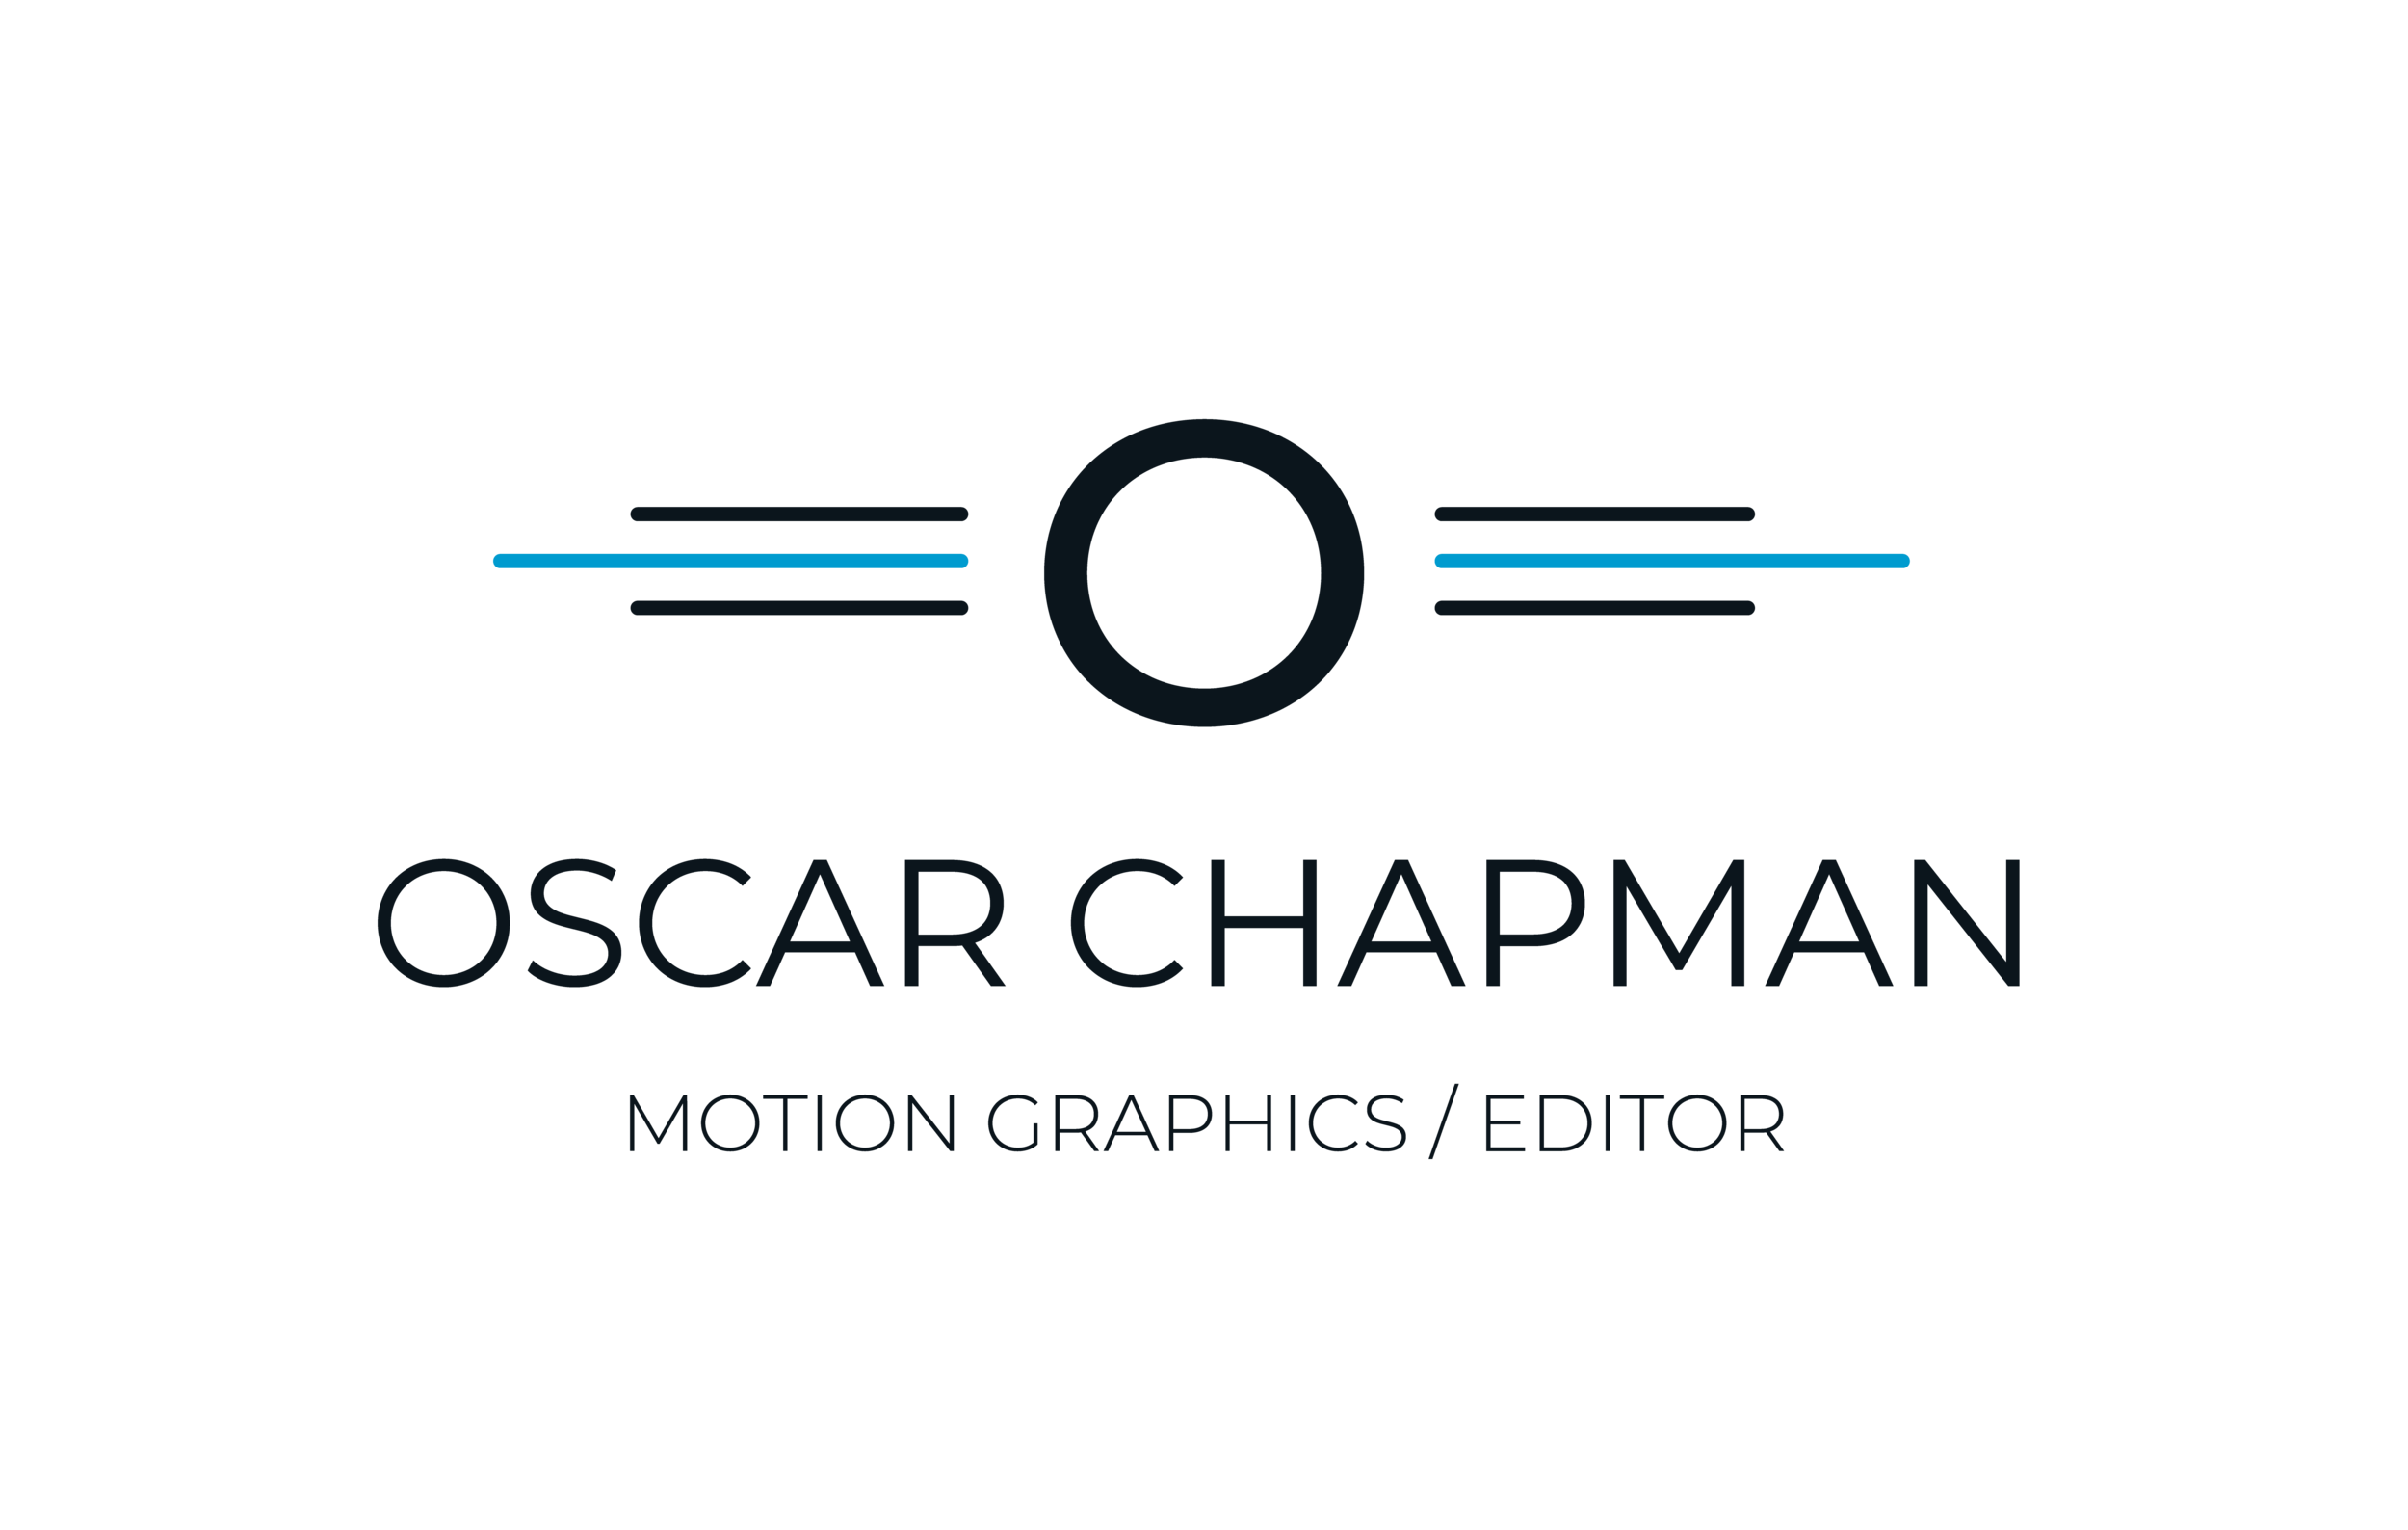 Oscar Chapman